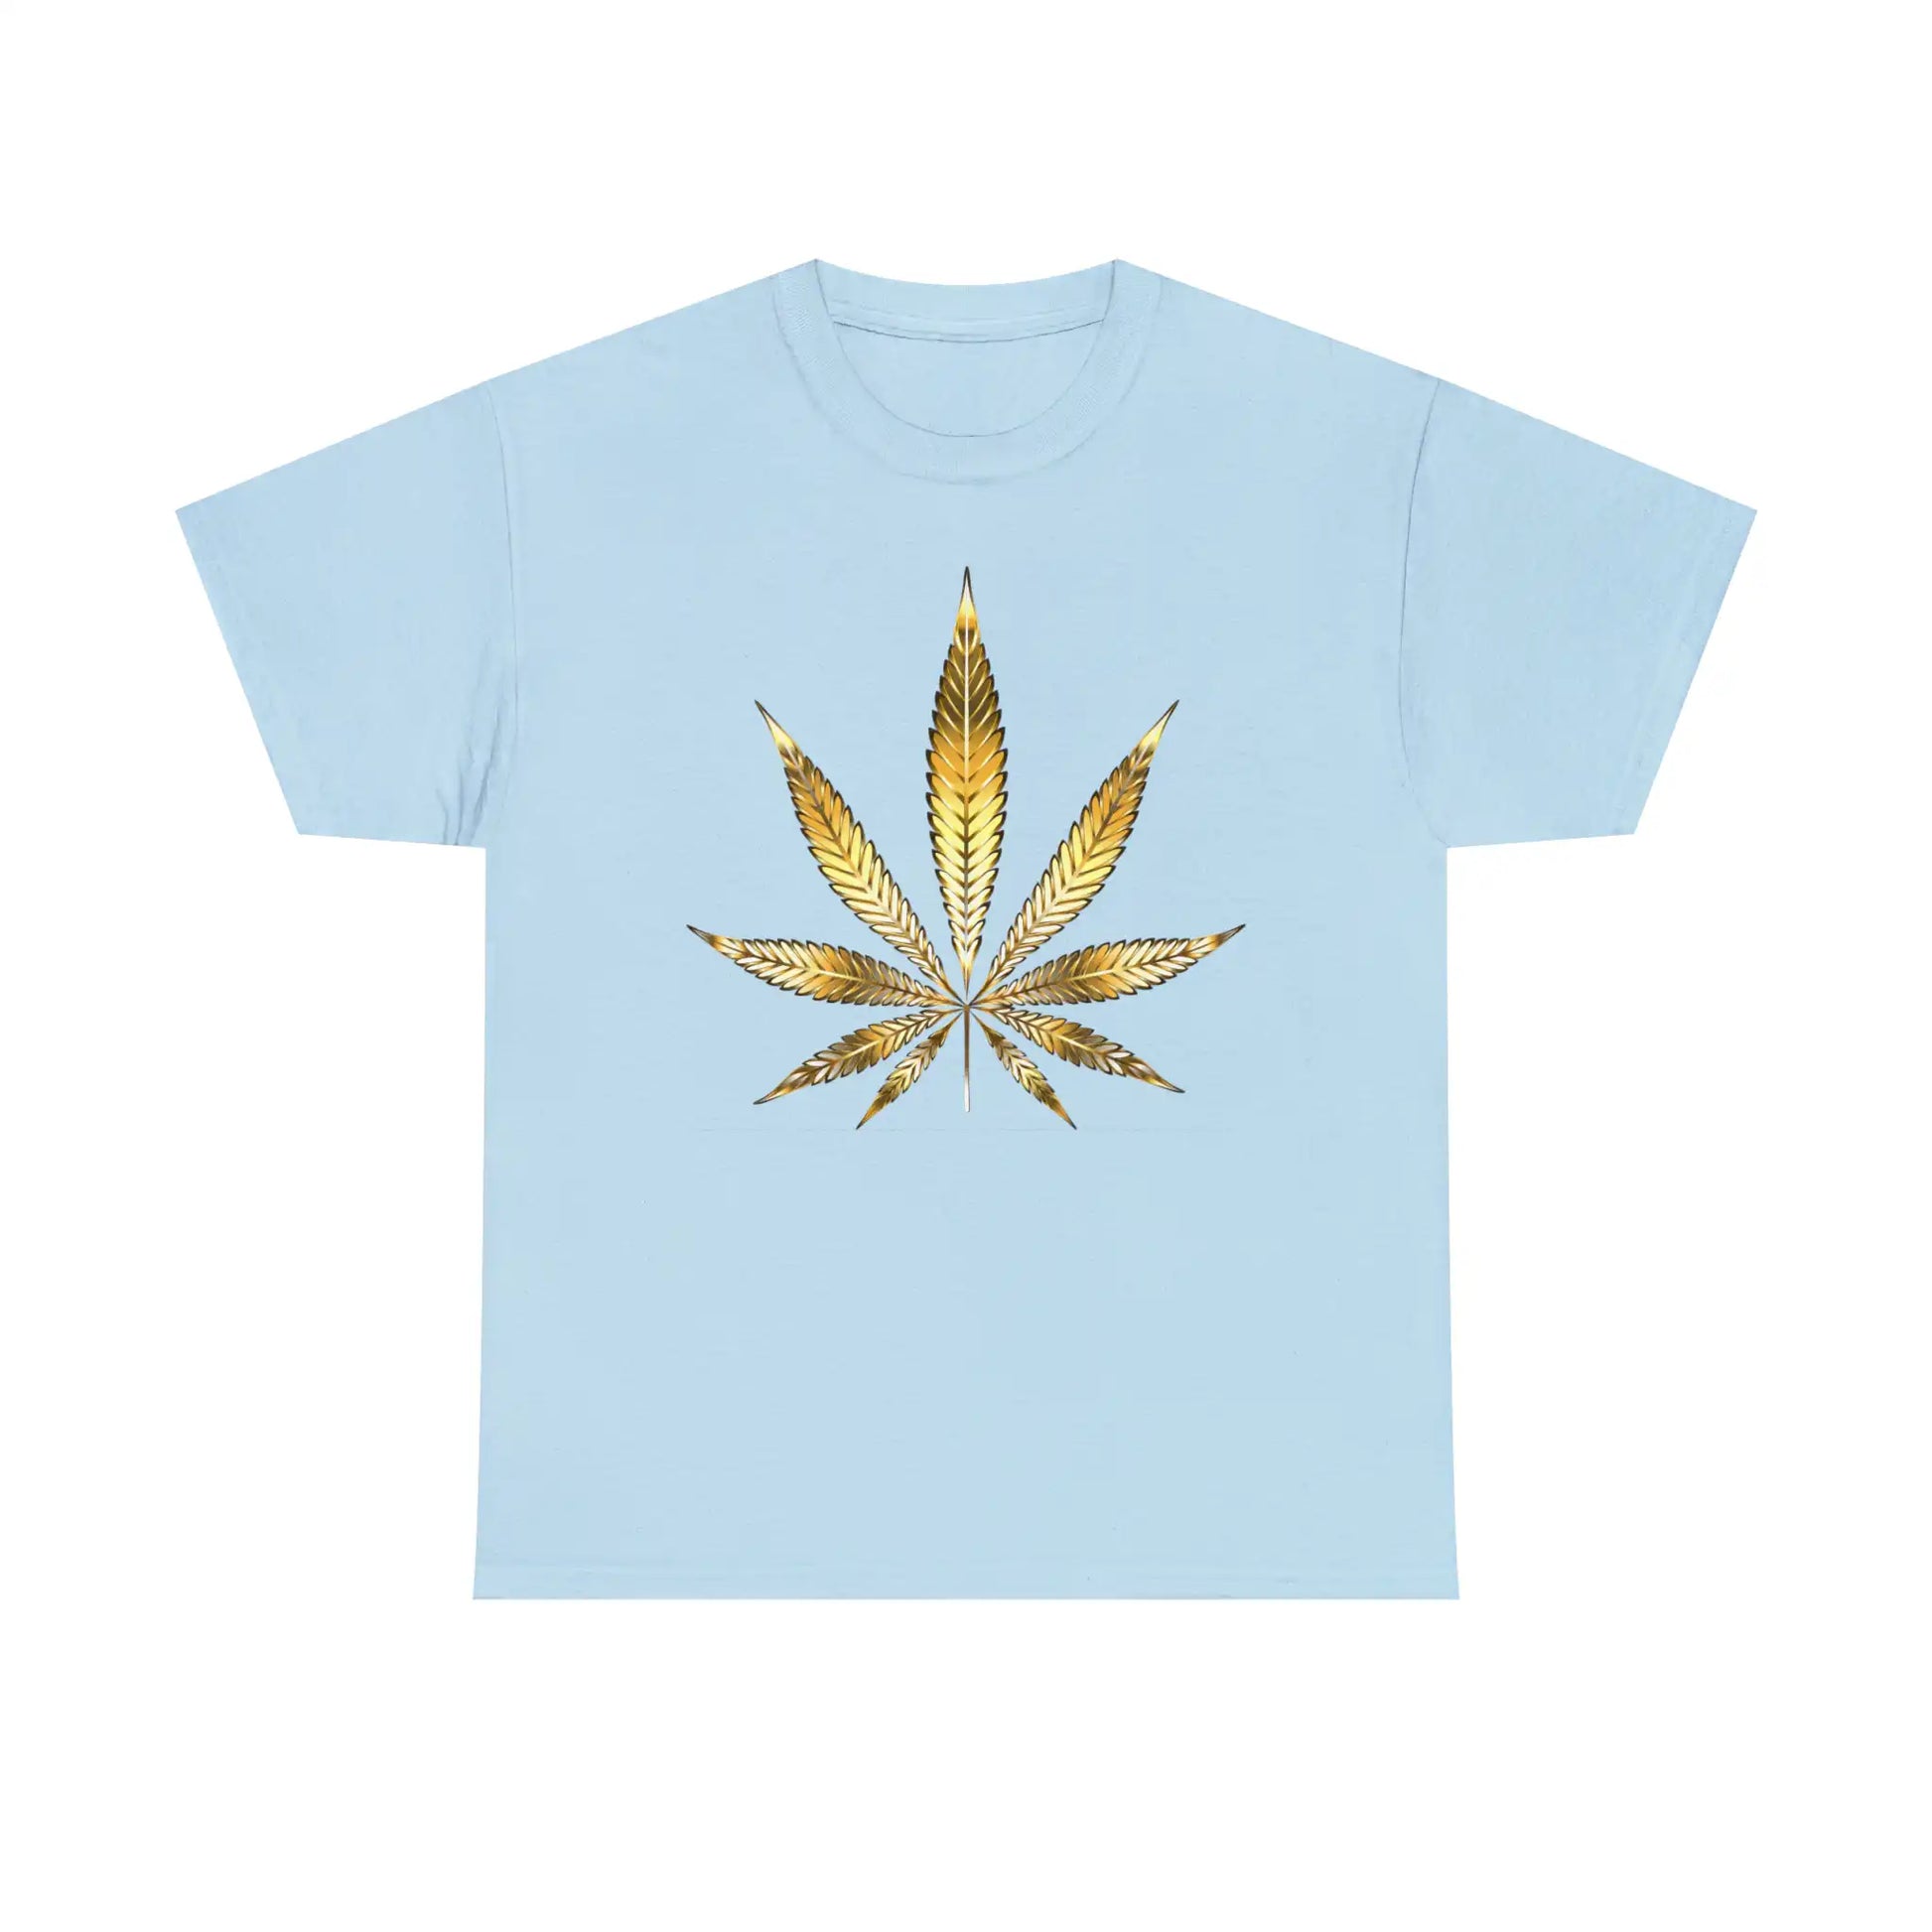 a Gold Marijuana Leaf Tee on a light blue t-shirt.